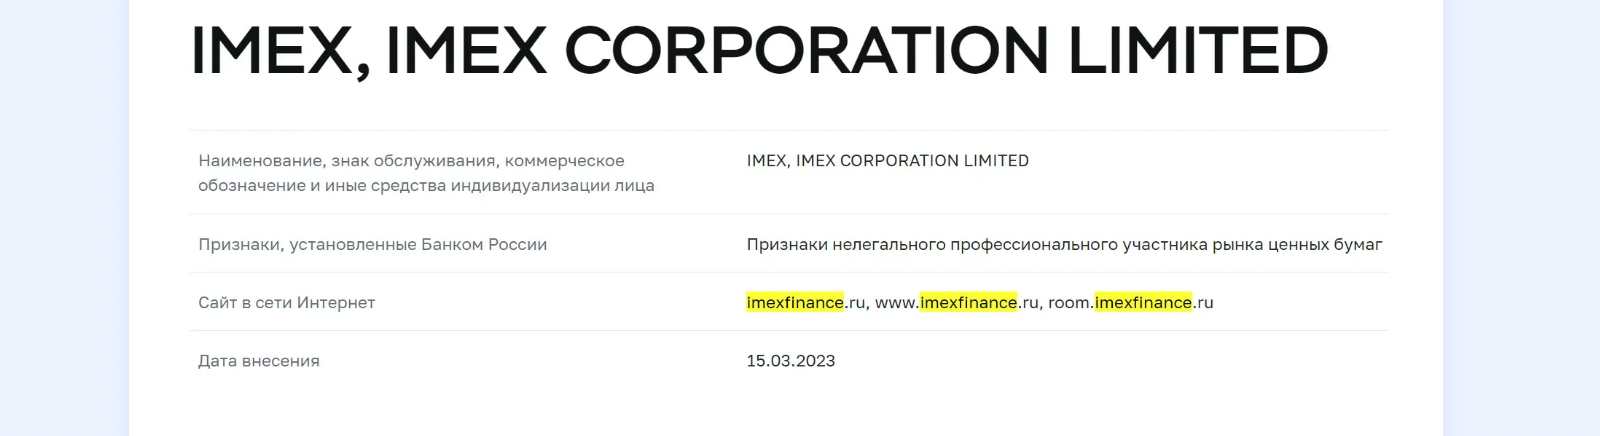 Imex Finance — лжеброкер, выдающий себя за другую компанию